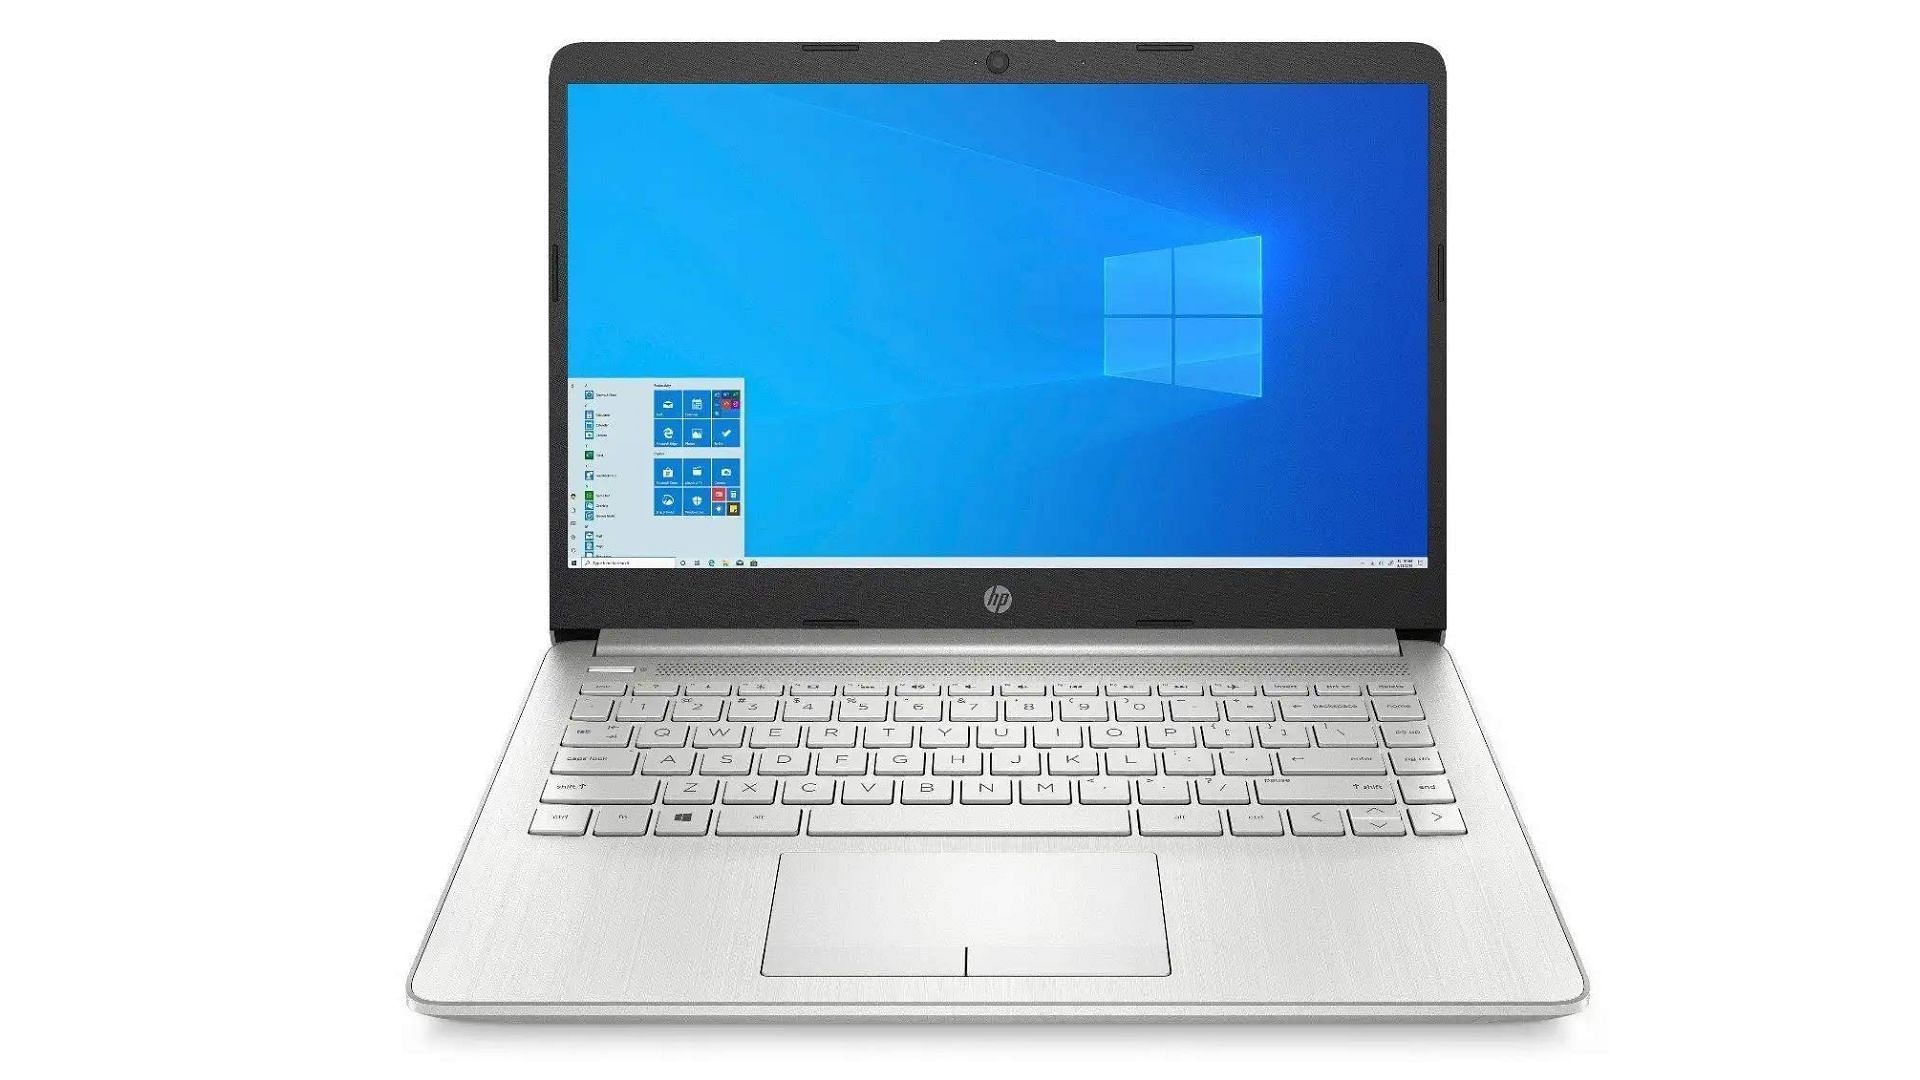 The compact laptop (Image via HP/Amazon)